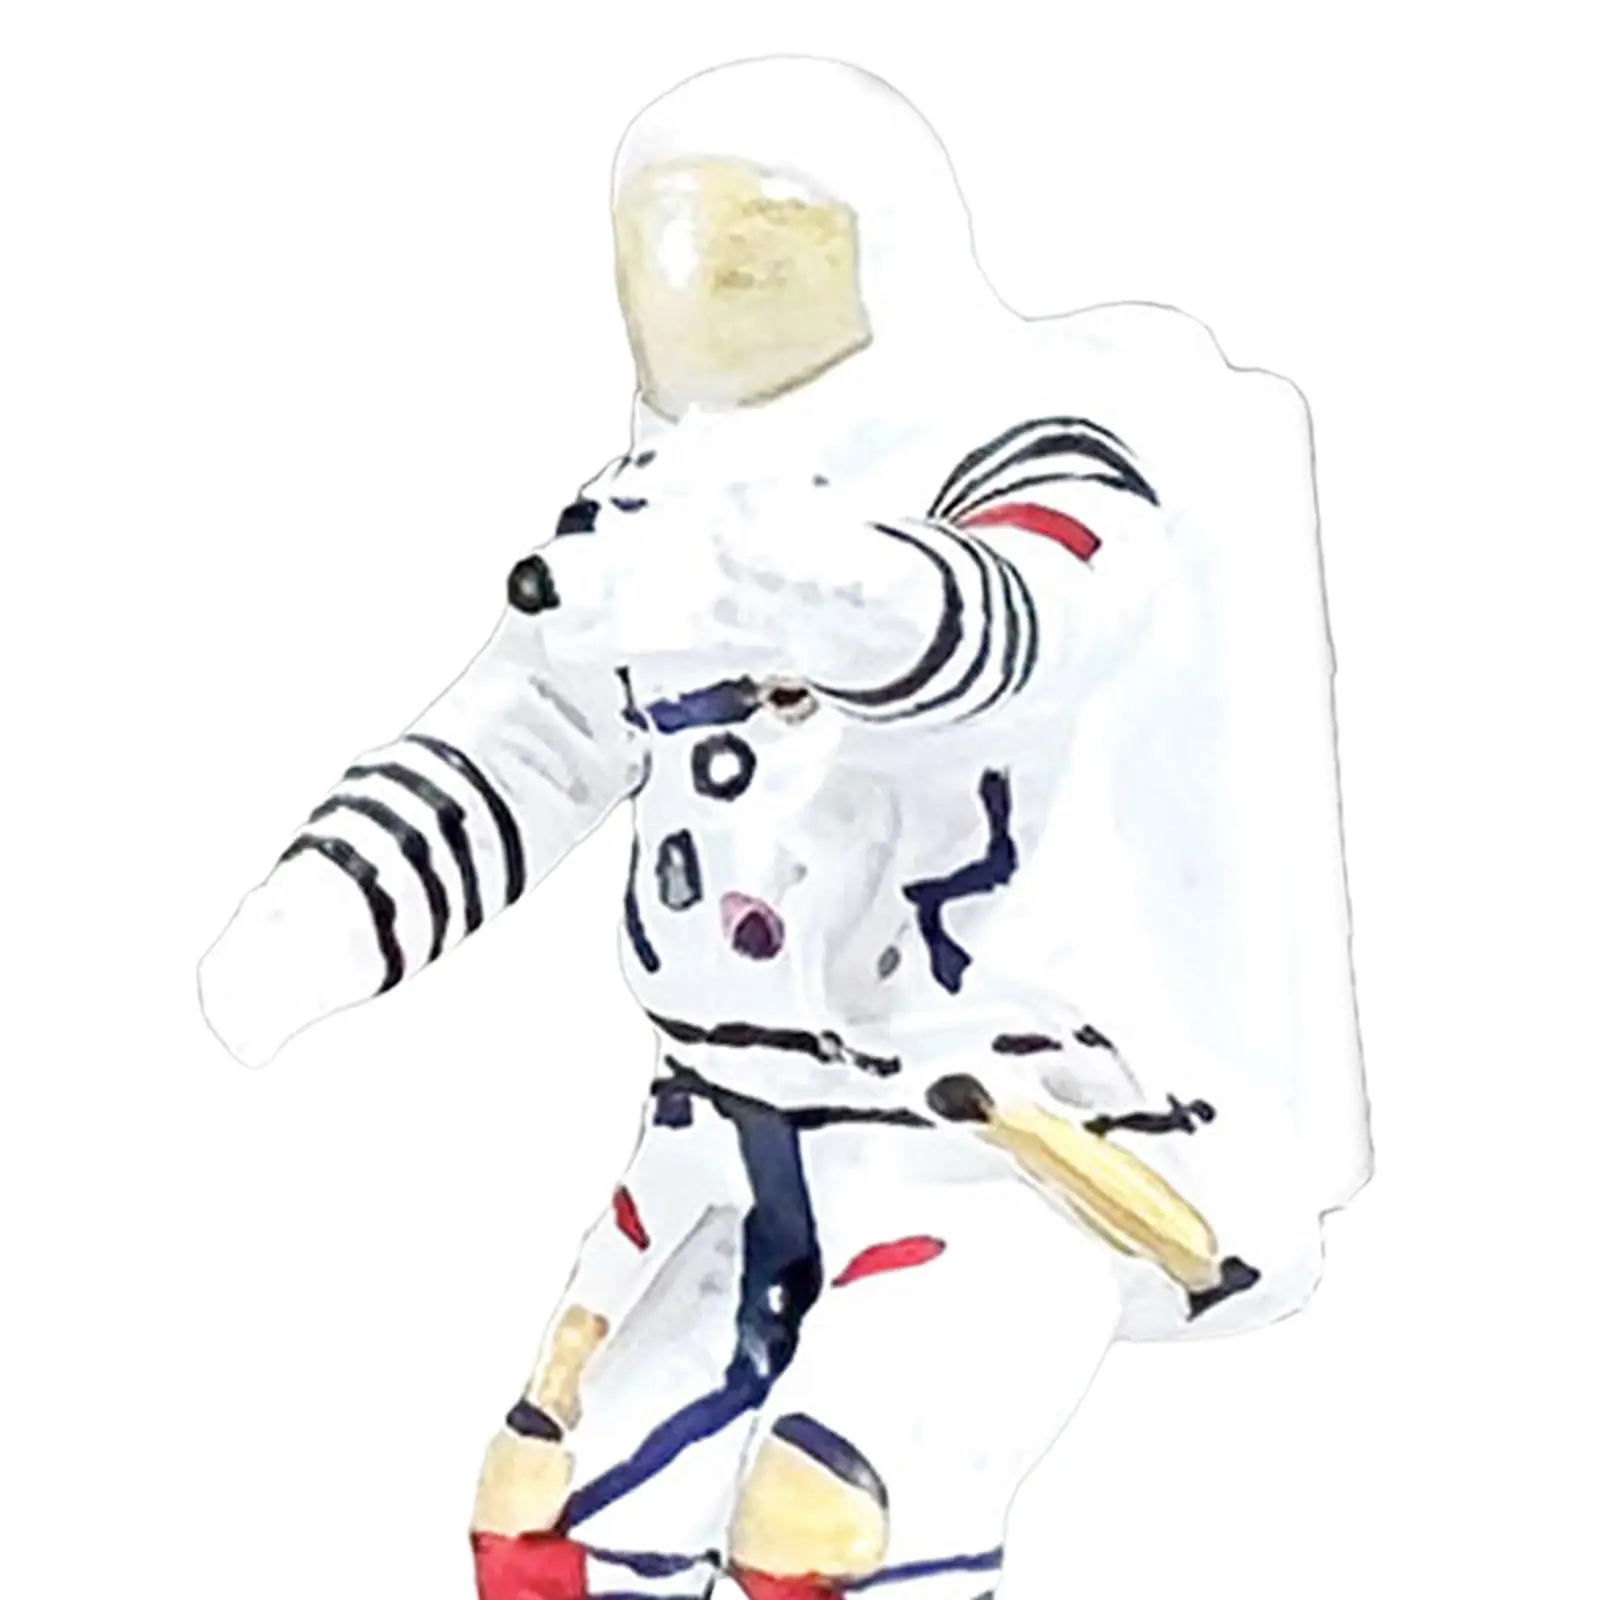 1/64 Astronaut Figurines Mini Astronaut Toys for DIY Scene Dollhouse Diorama